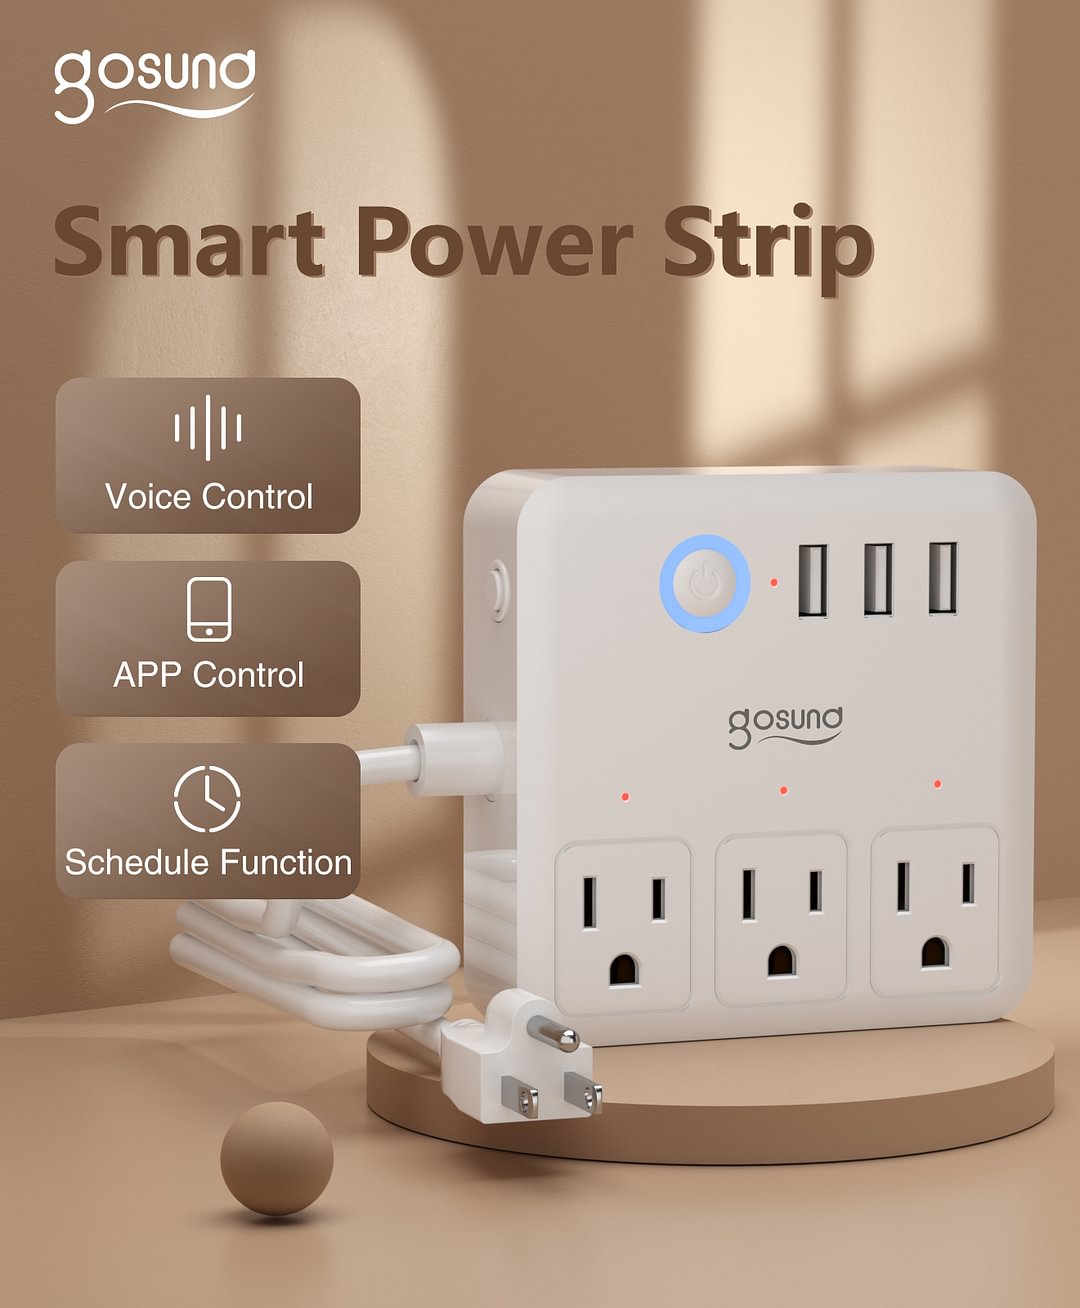 Gosund Smart Power Strip WP9 